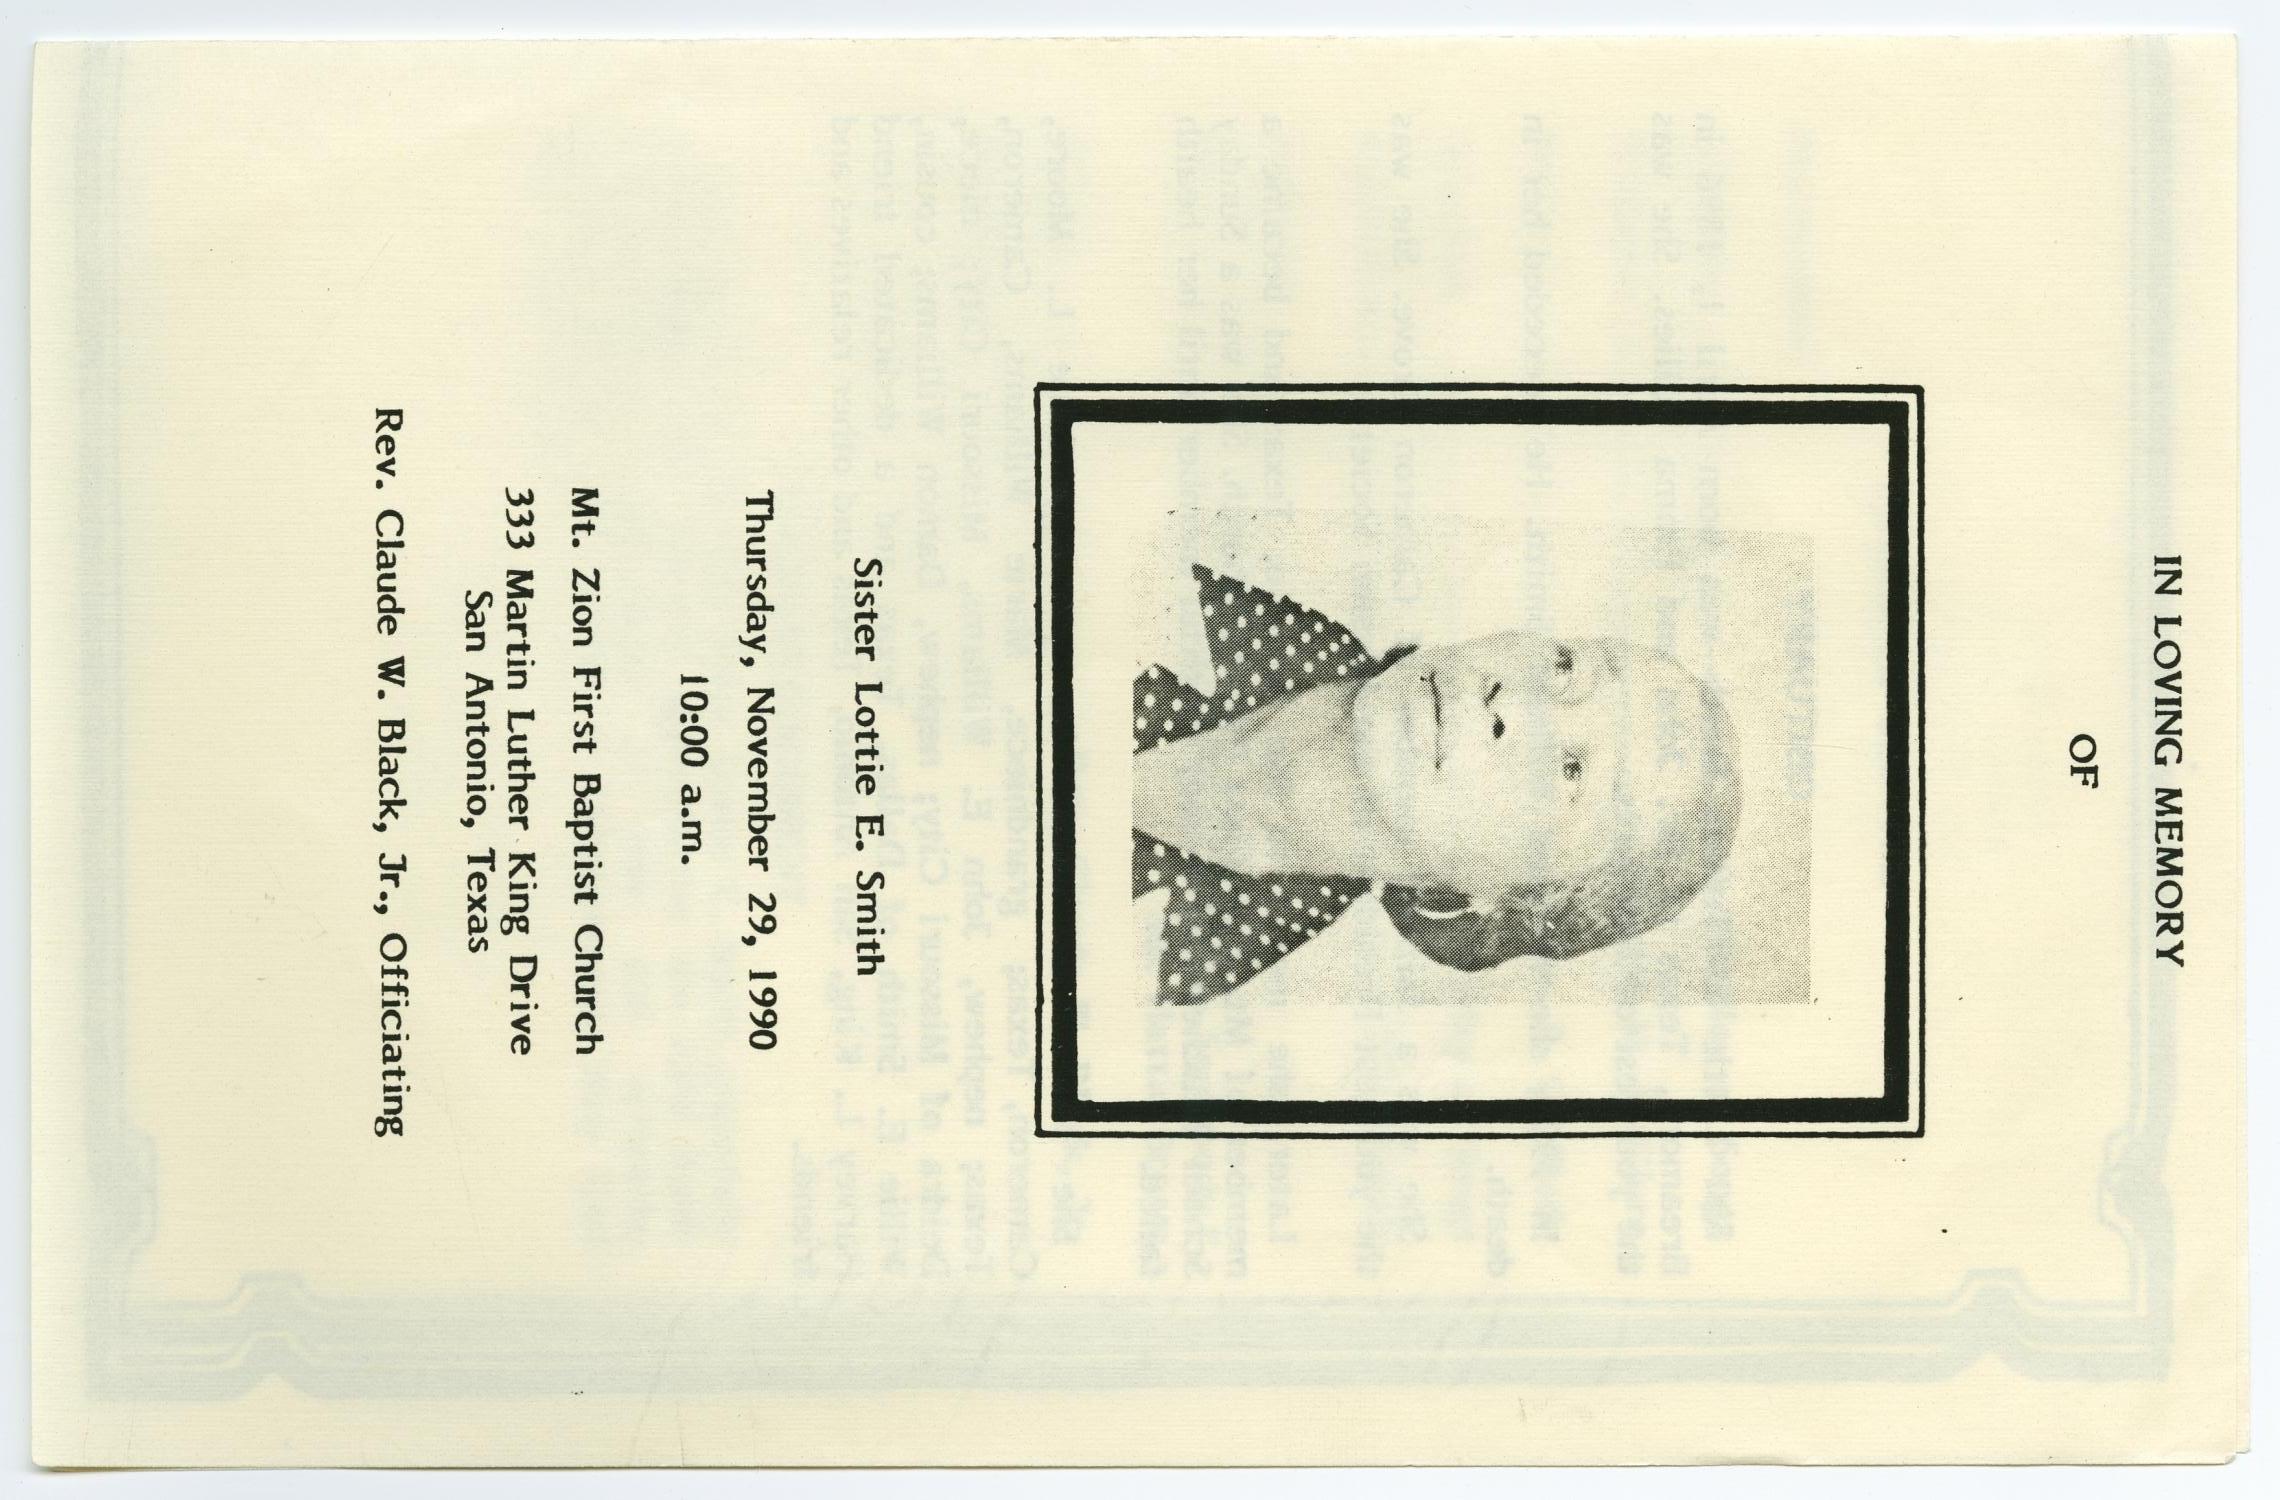 [Funeral Program for Lottie E. Smith, November 29, 1990]
                                                
                                                    [Sequence #]: 1 of 3
                                                